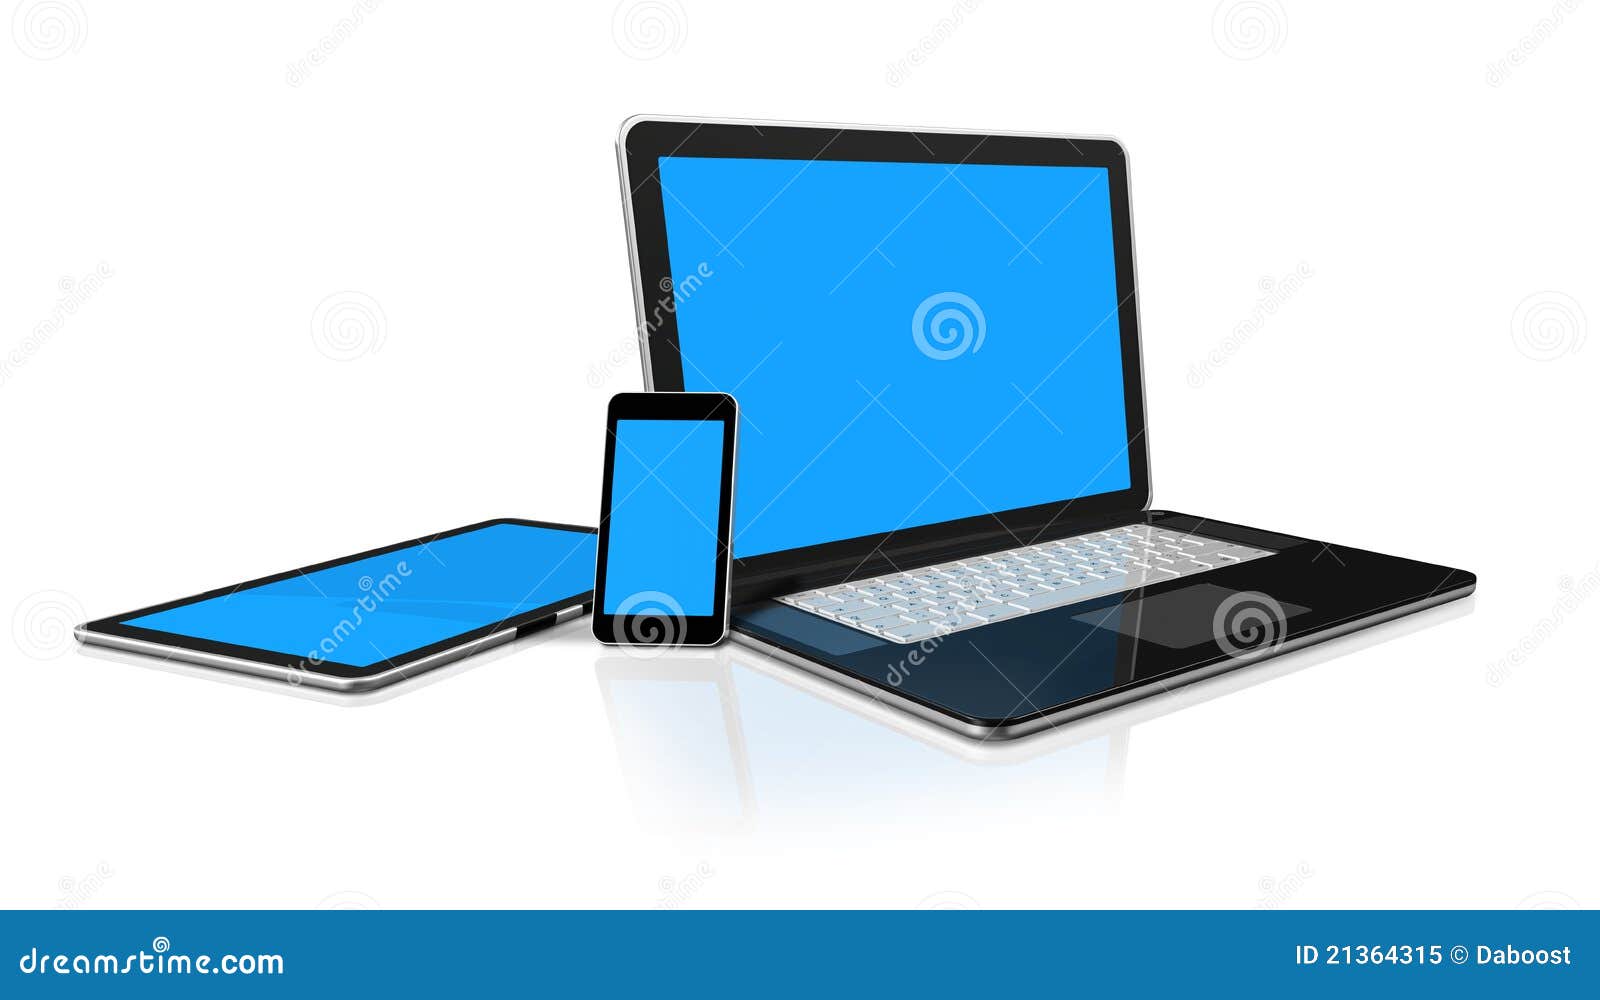 laptop, mobile phone, digital tablet pc